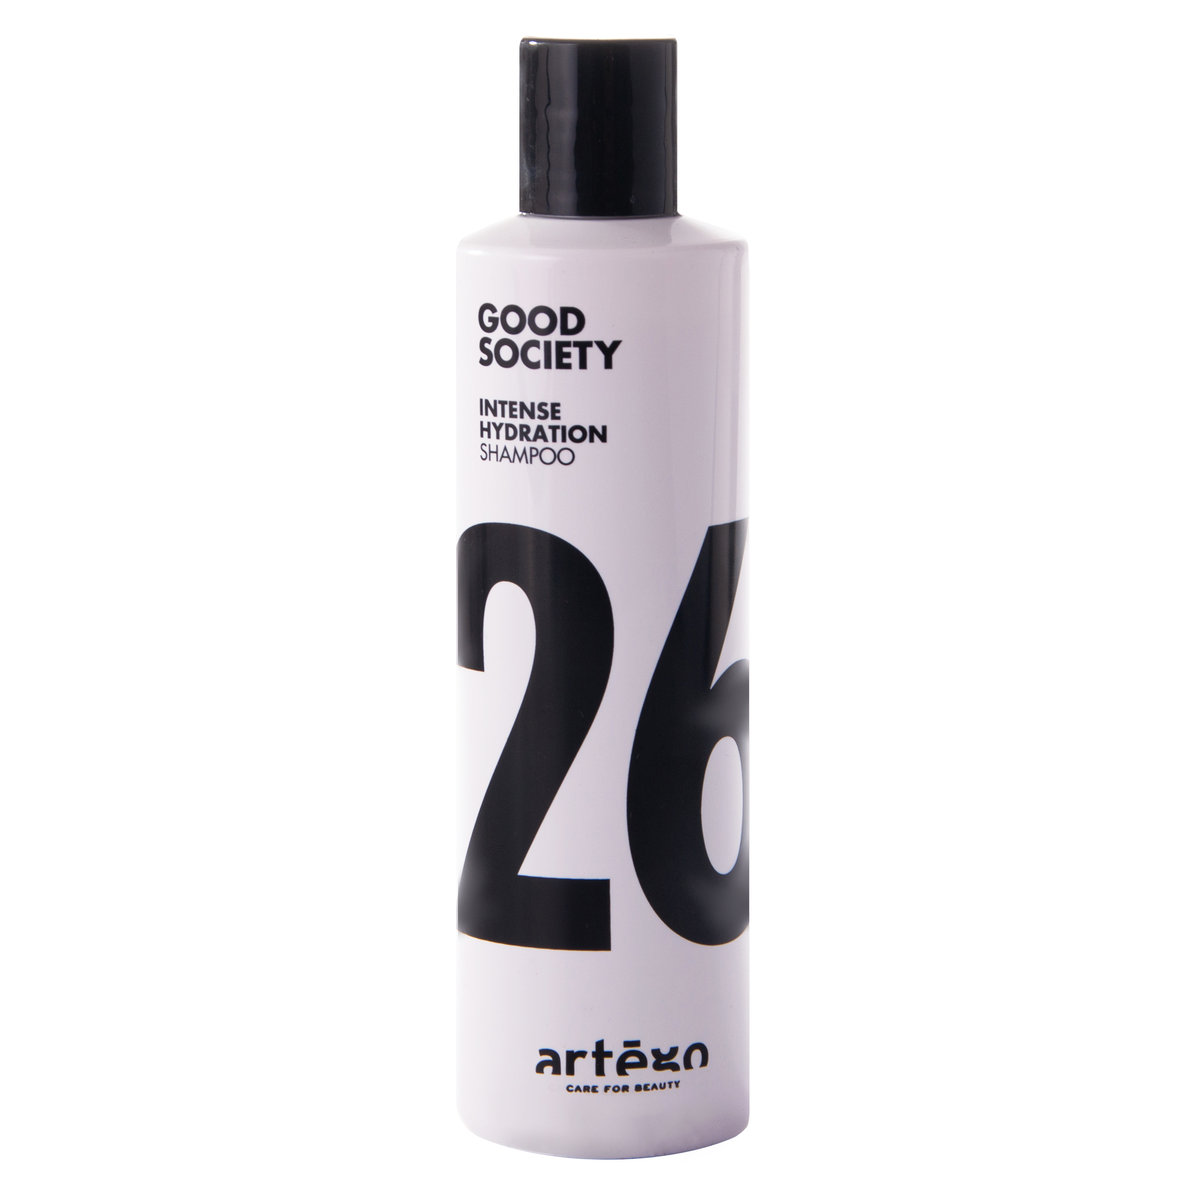 artego intense hydration 26 szampon wizaz